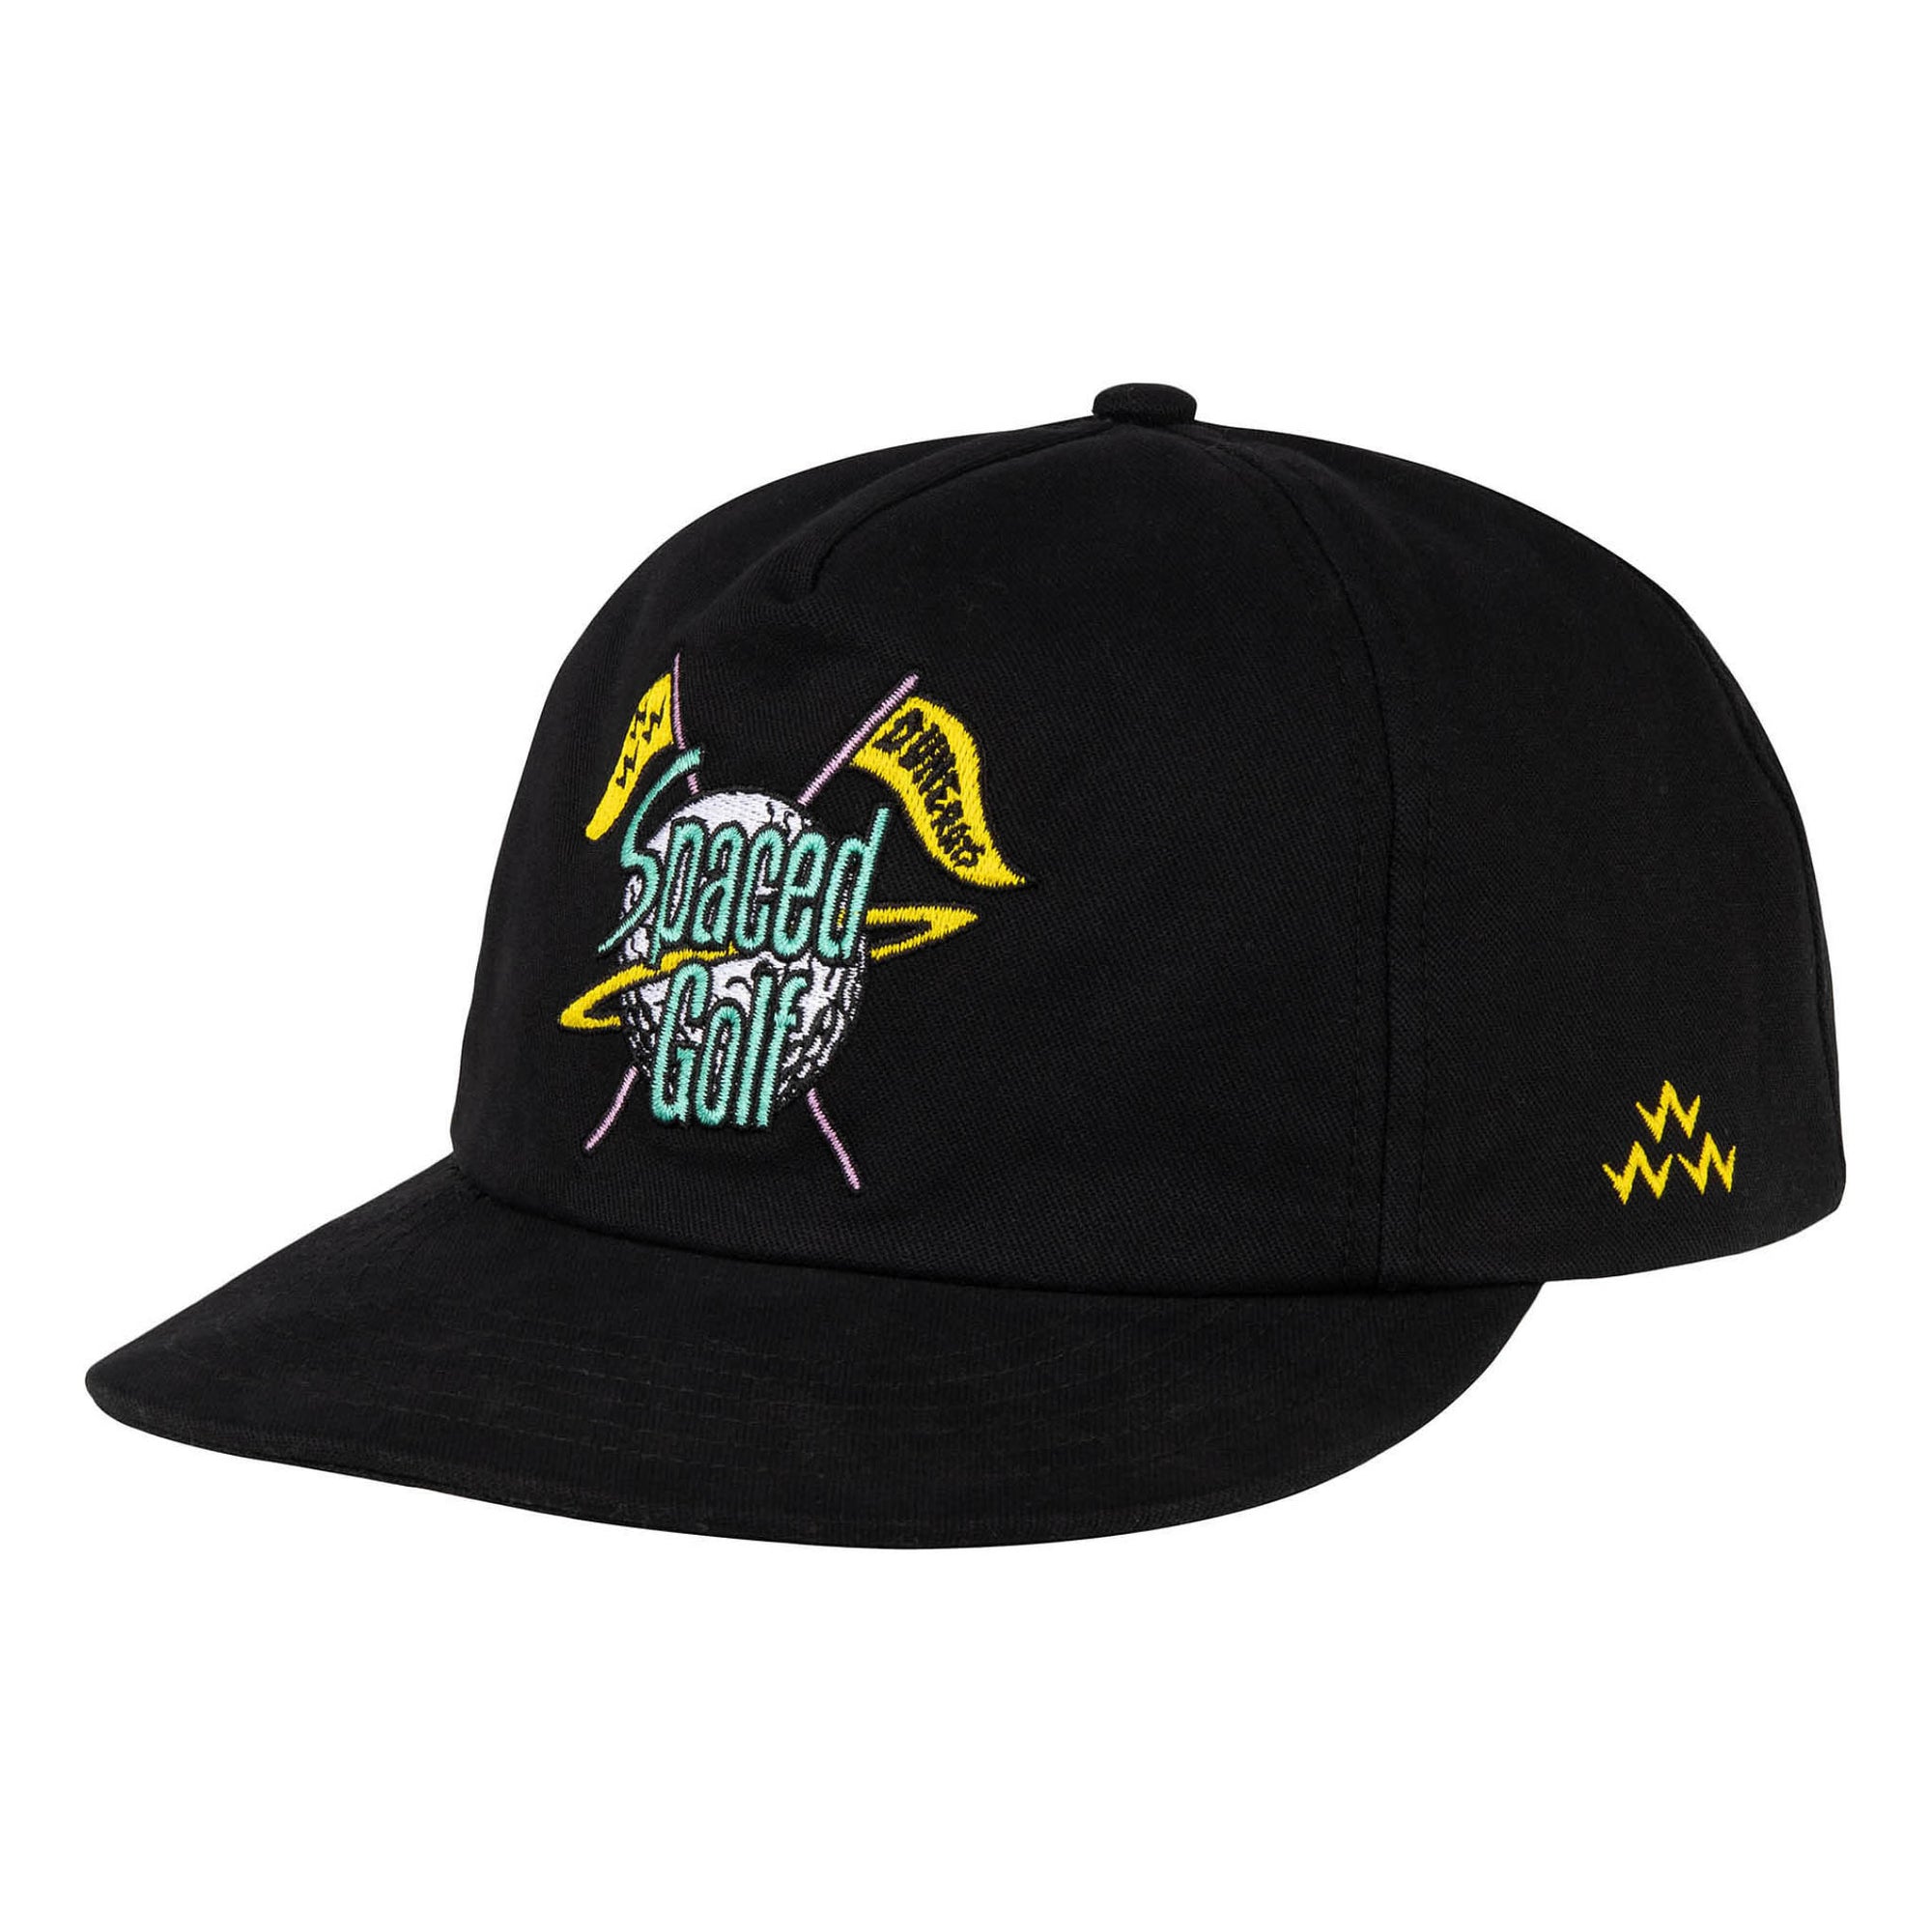 birds of condor dune rats spaced golf galaxy embroidered emblem soft peak snapback hat cap front